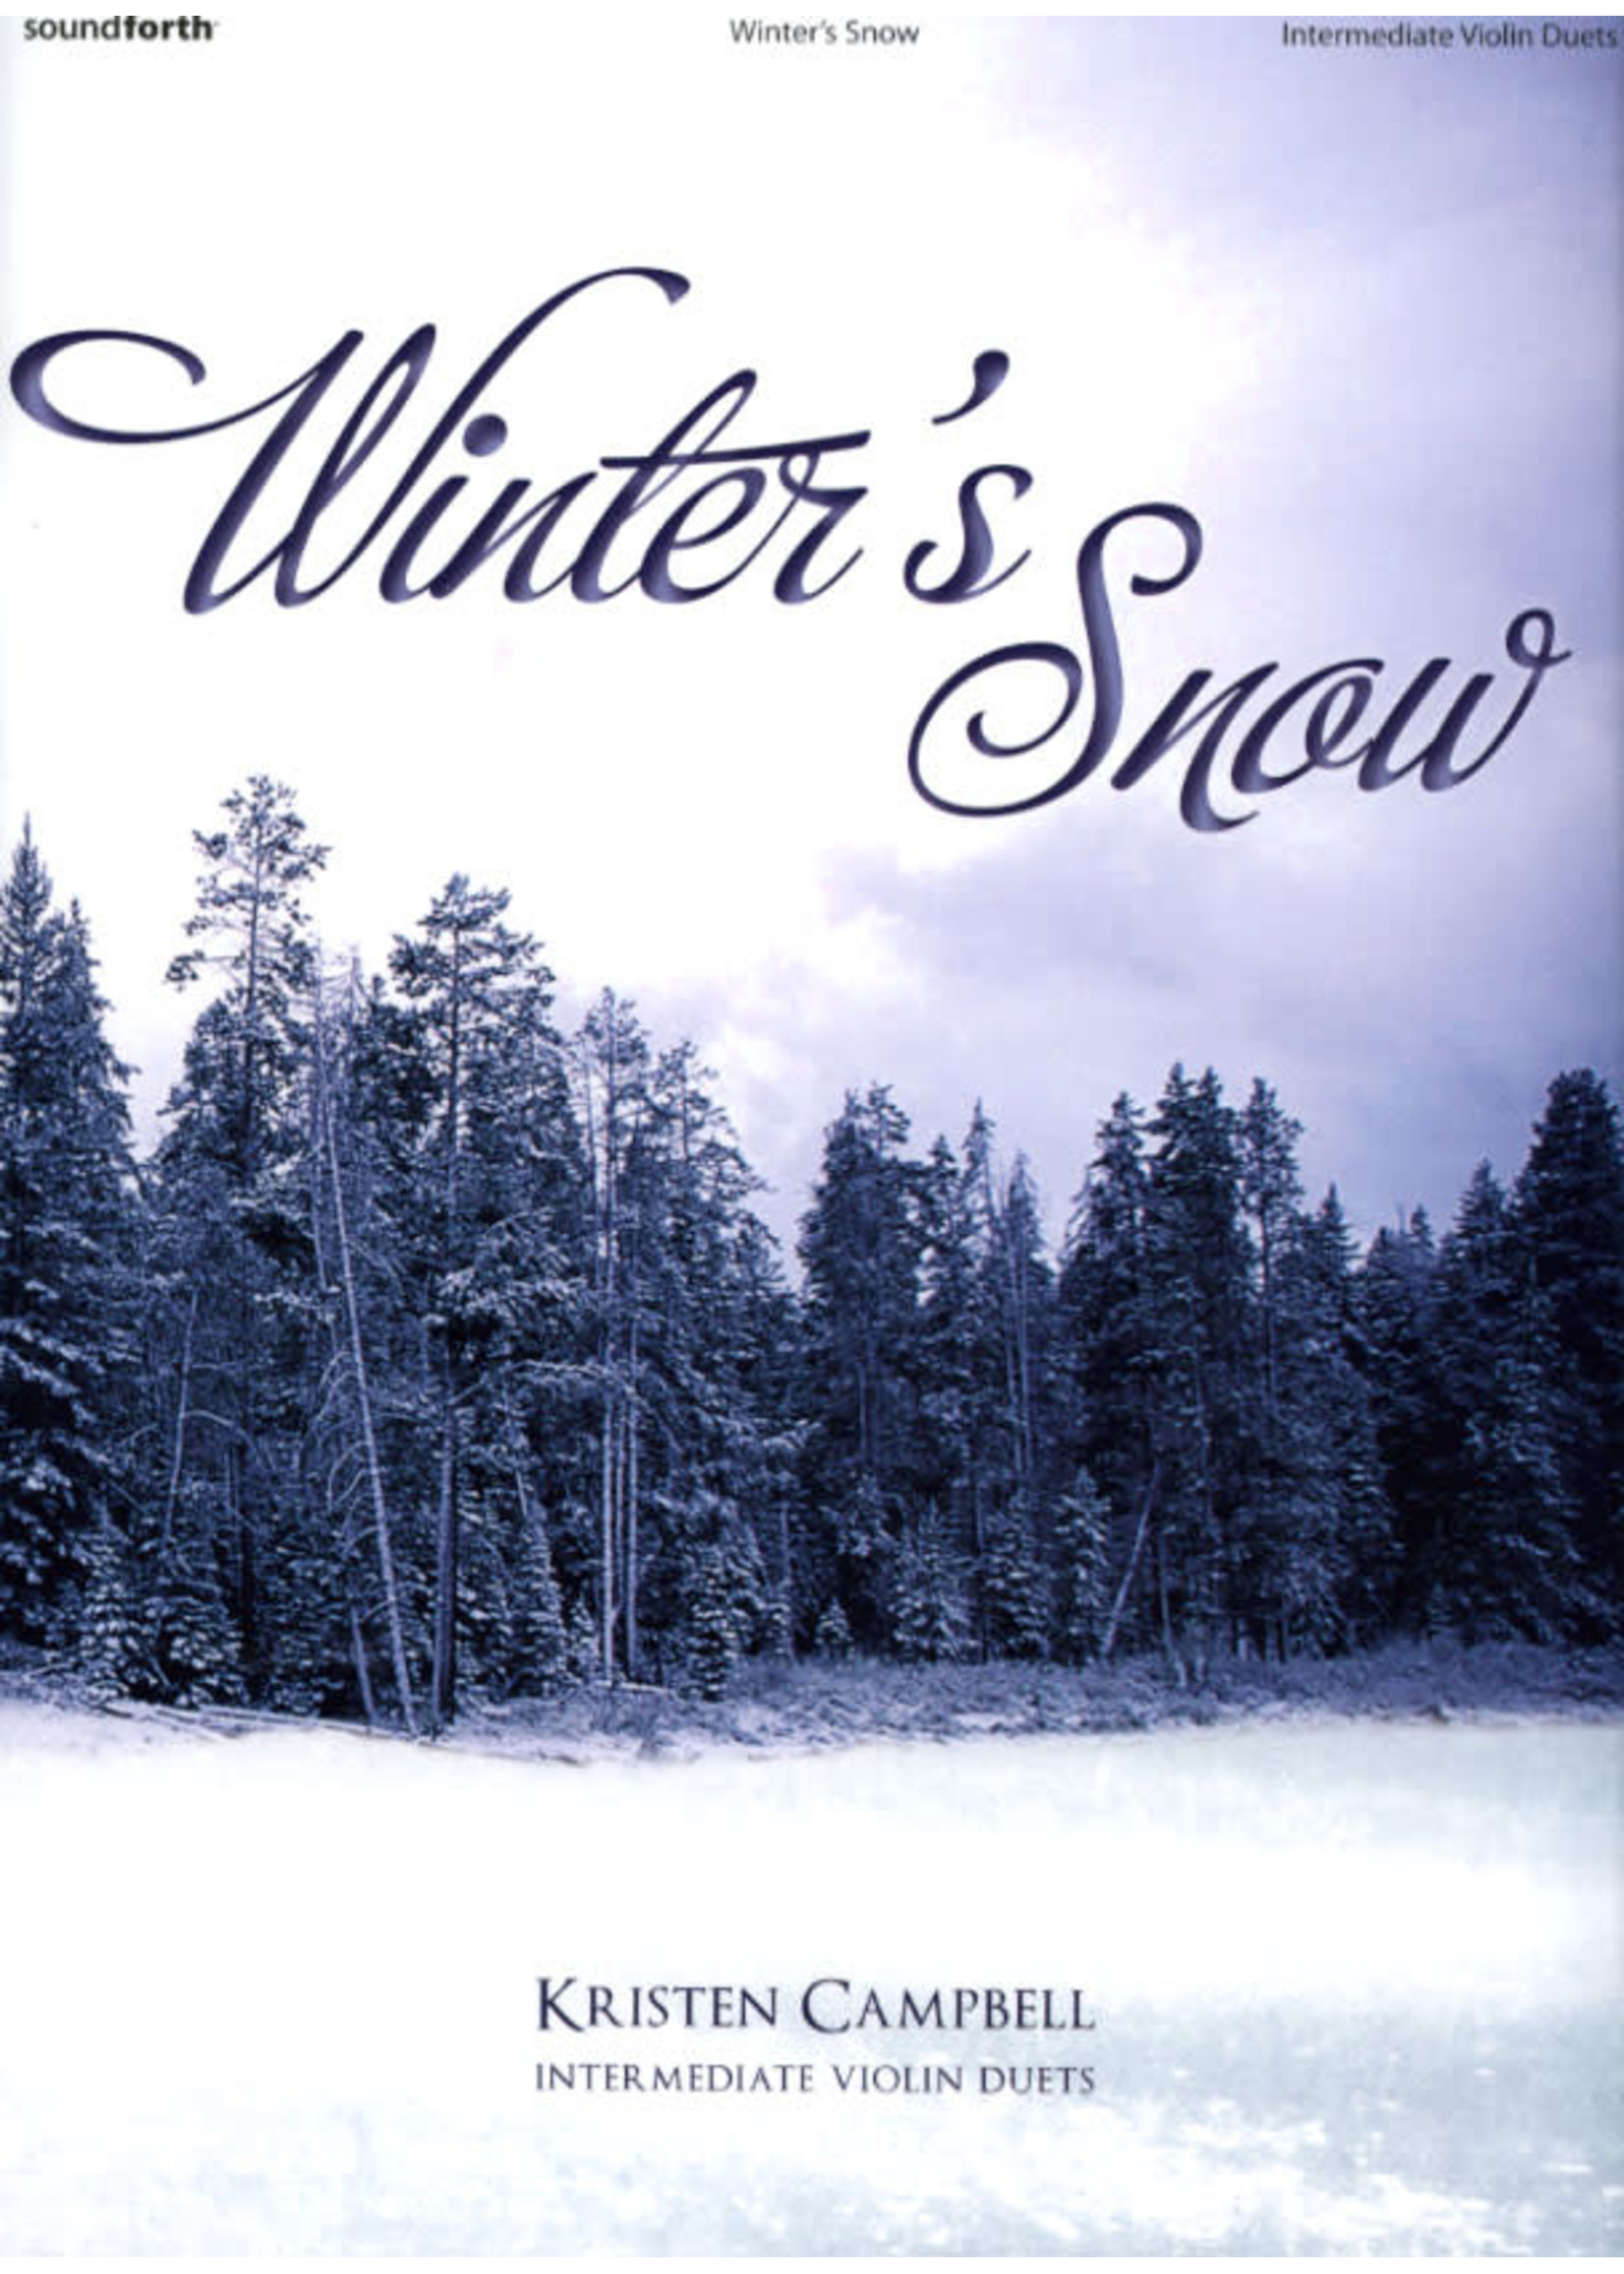 Winter's Snow (Intermediate Violin Duets-Campbell)